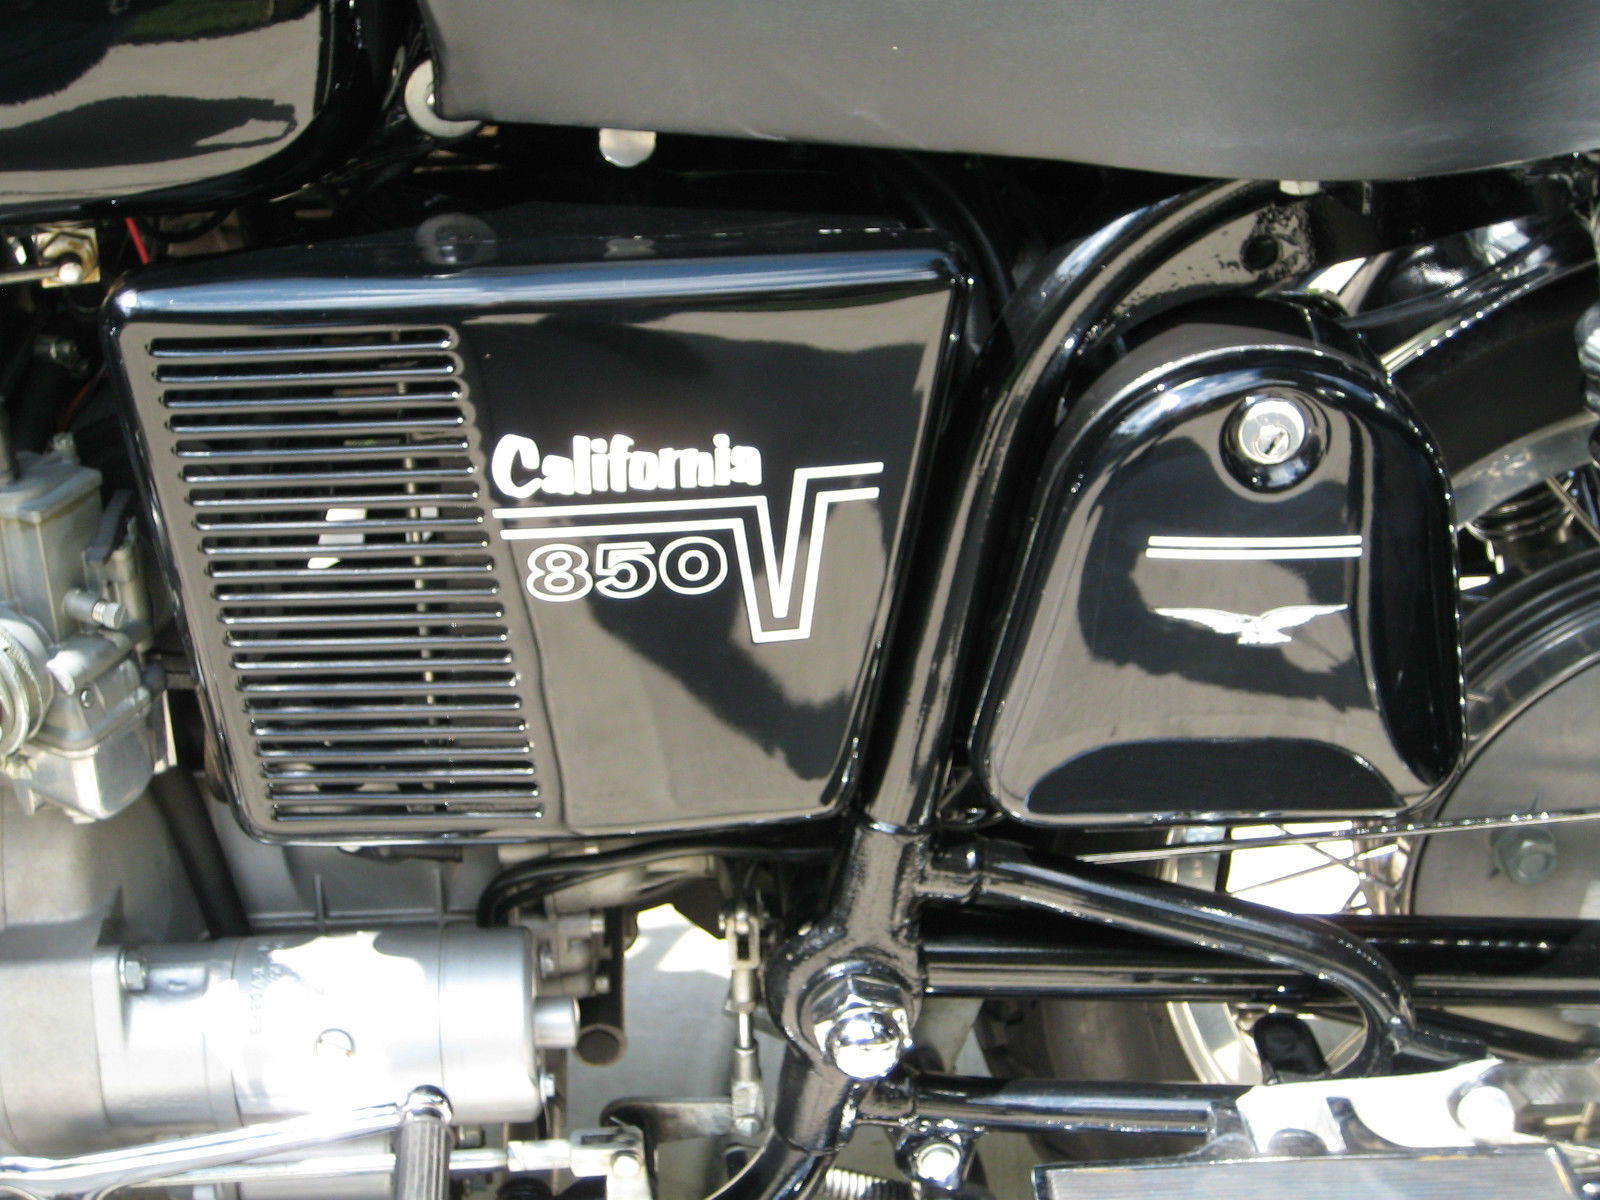 Moto Guzzi California - 1974 - Side Panel, 850 California Decal, Frame and Swing Arm.